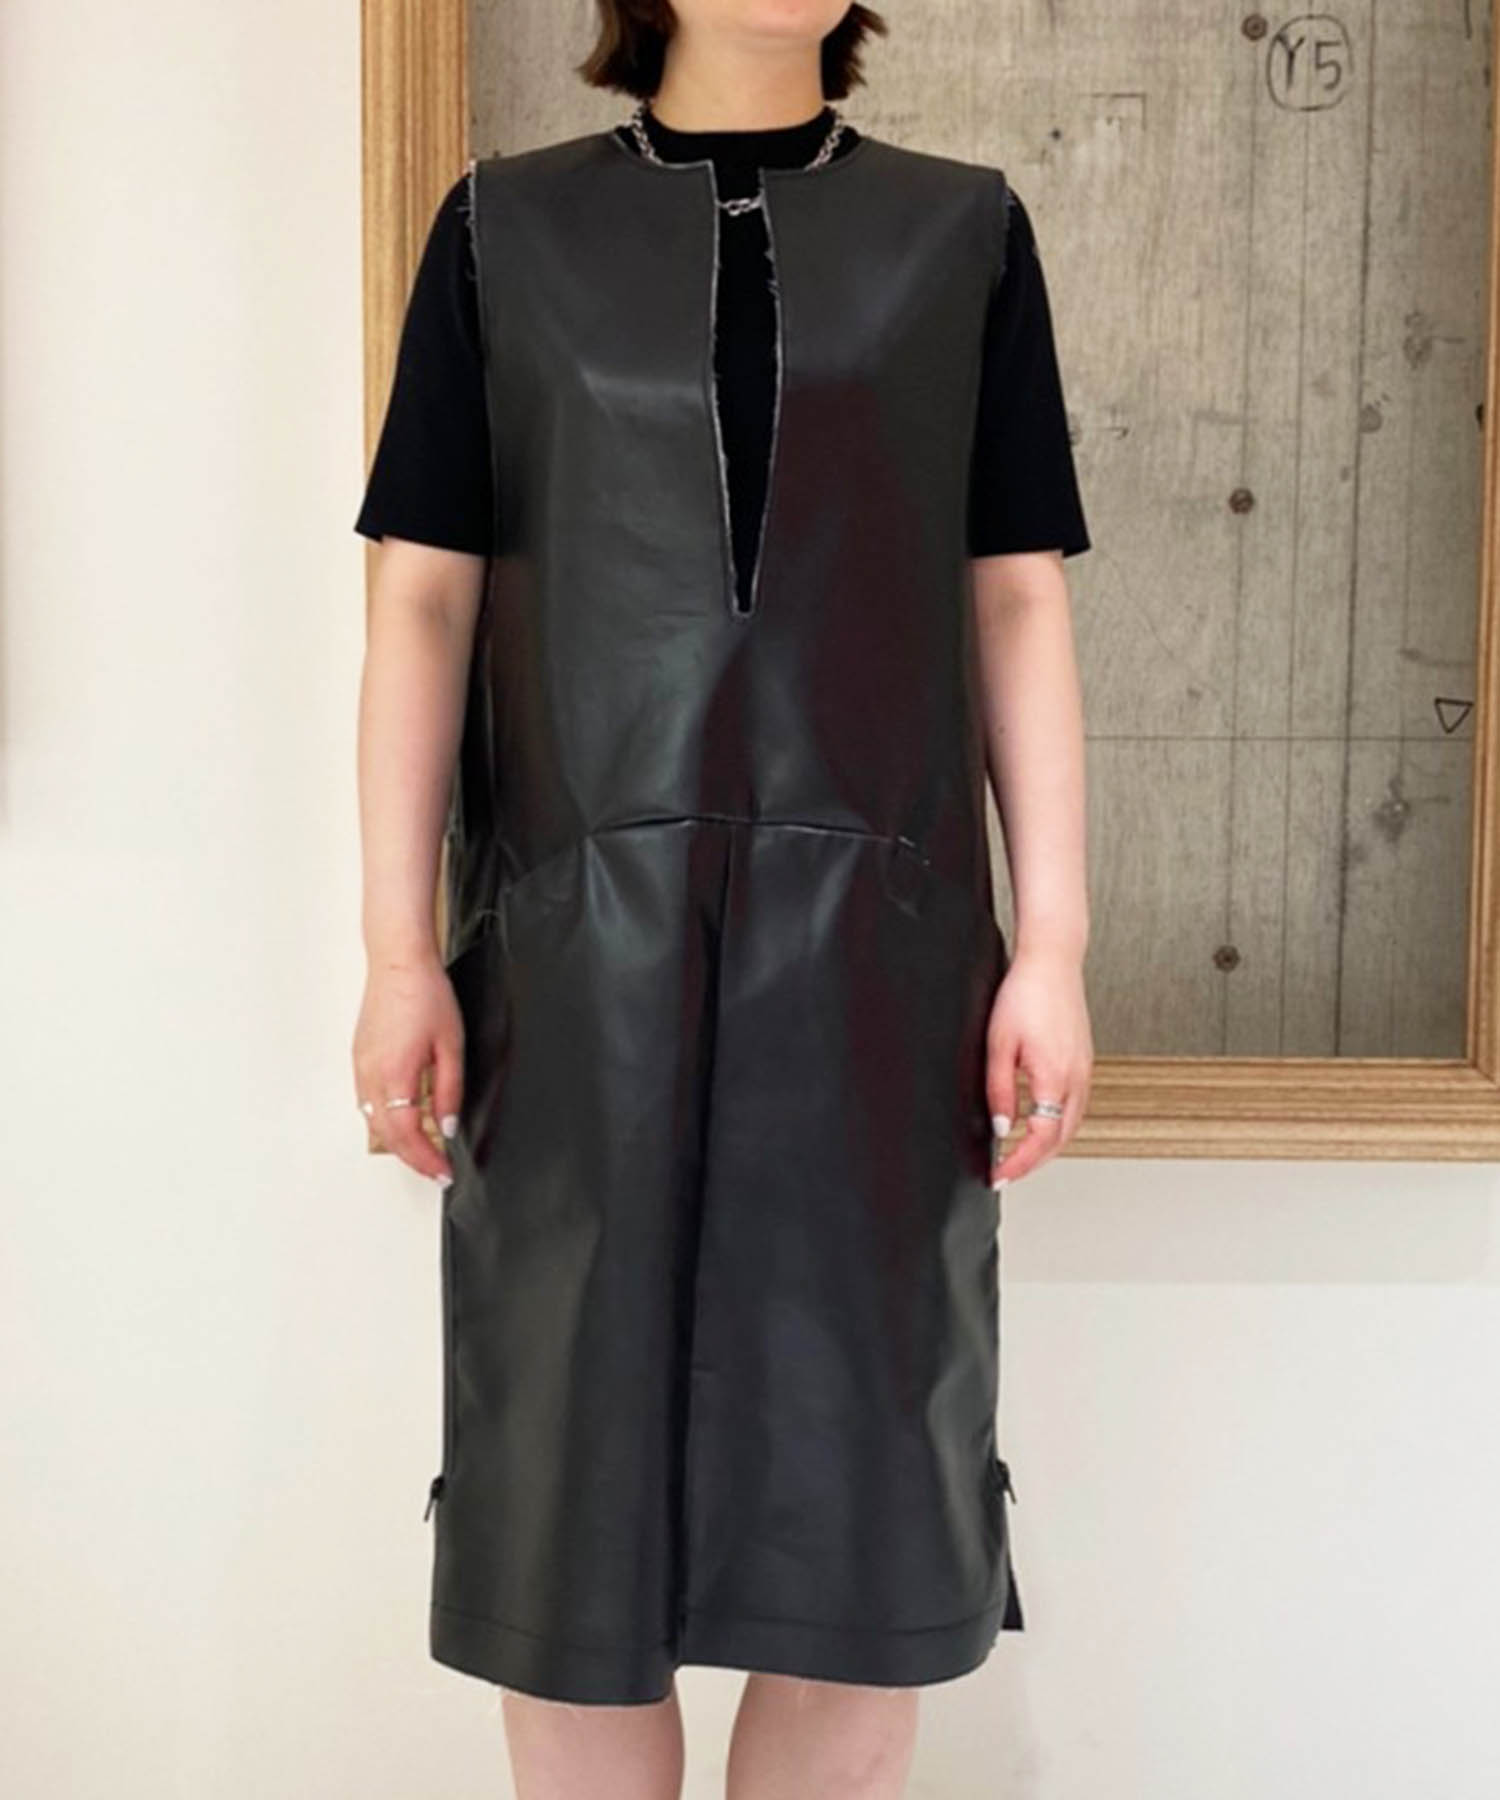 Fake leather bonding dress TOGA PULLA